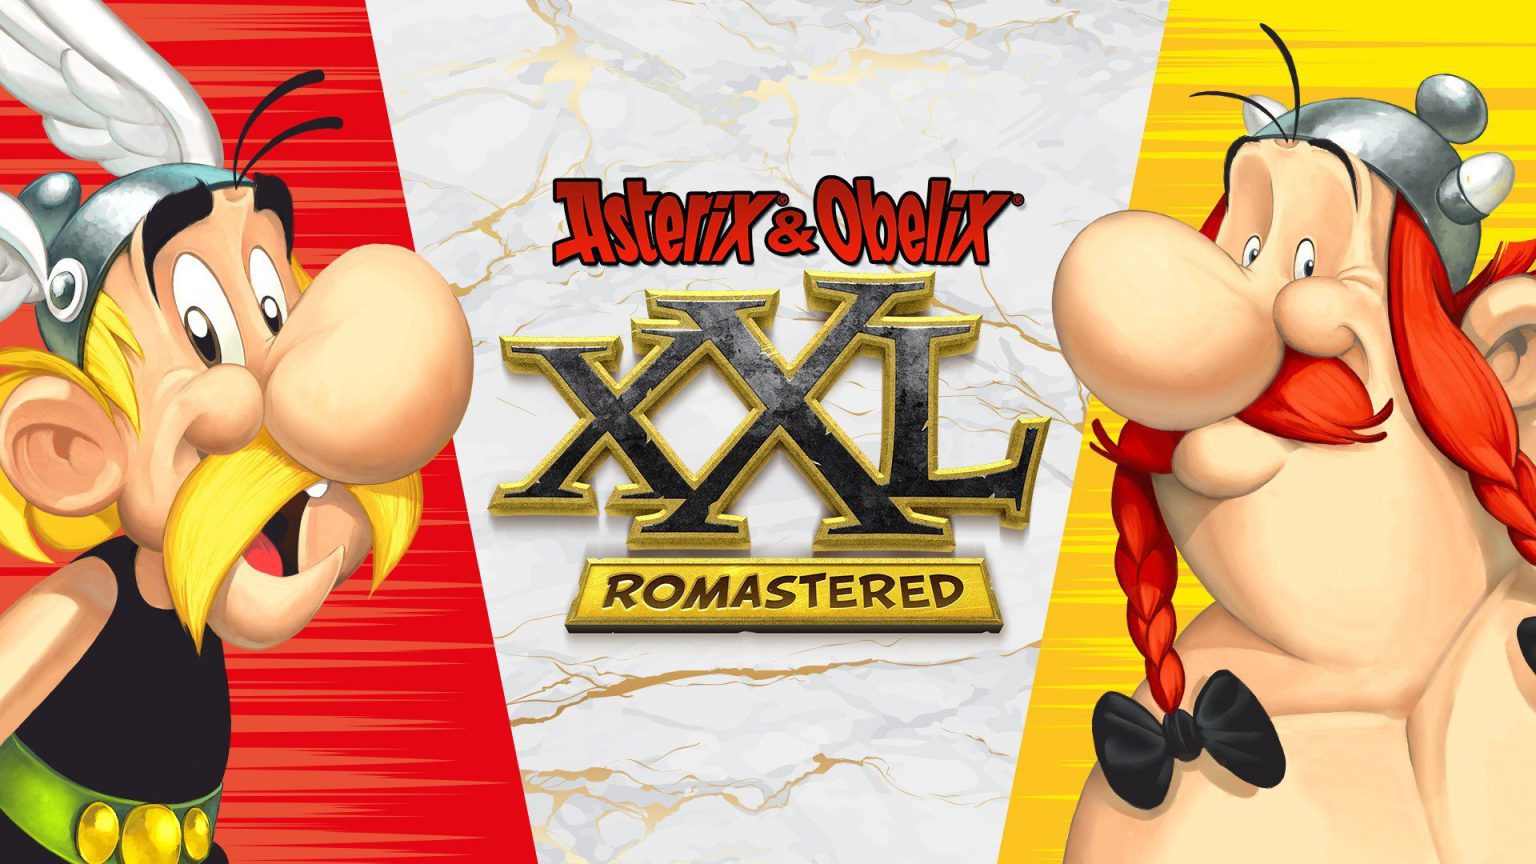 asterix and obelix xxl romastered - generacion xbox